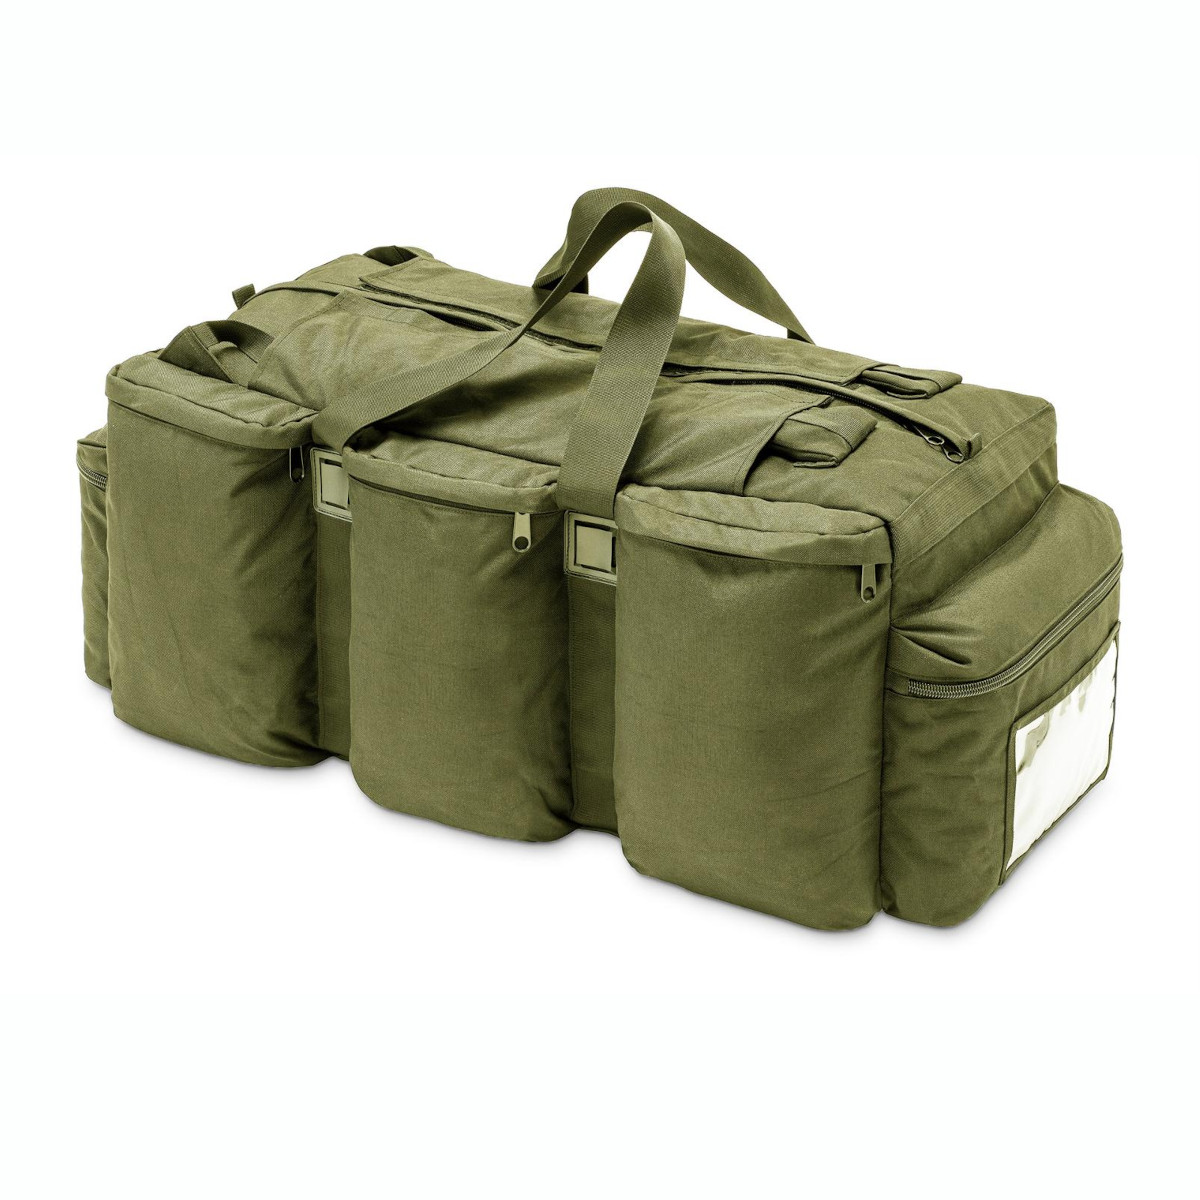 Defcon 5 Duffle Bag 100 groene reistas